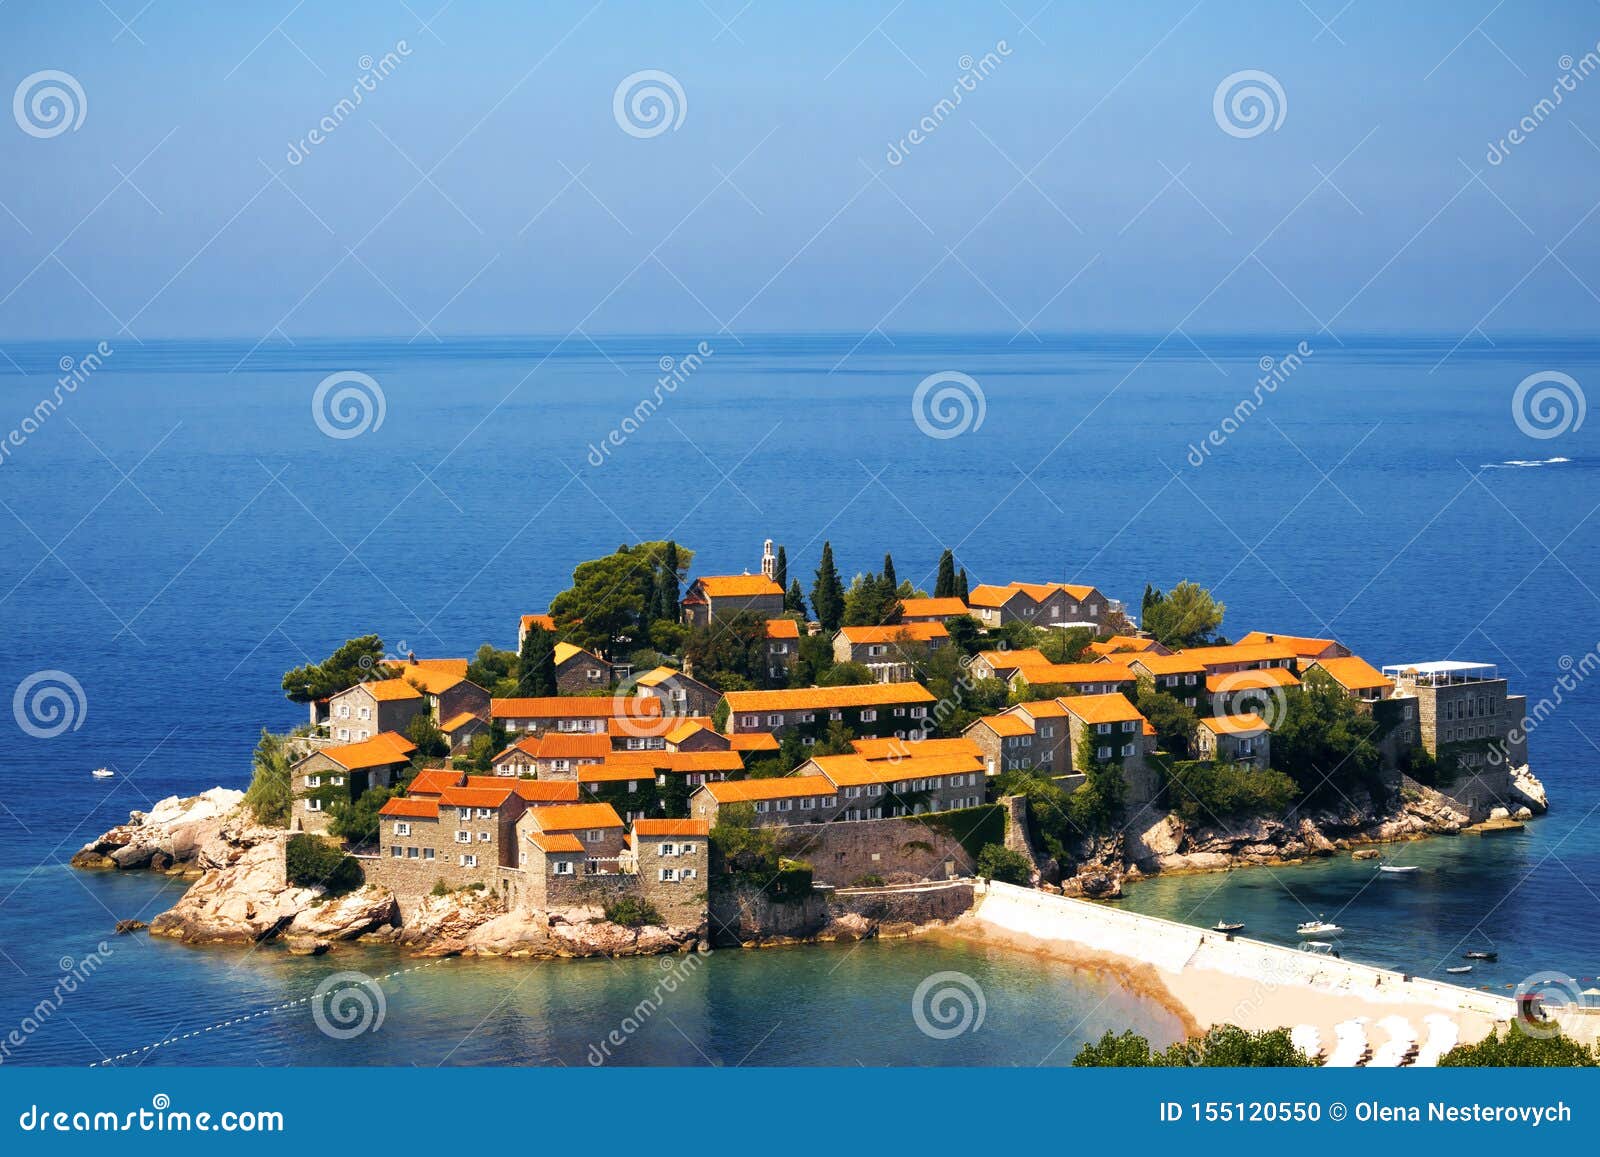 sveti stefan island in budva in a beautiful summer day, montenegro. adriatic sea, montenegro, europe. beautiful world of mediterra